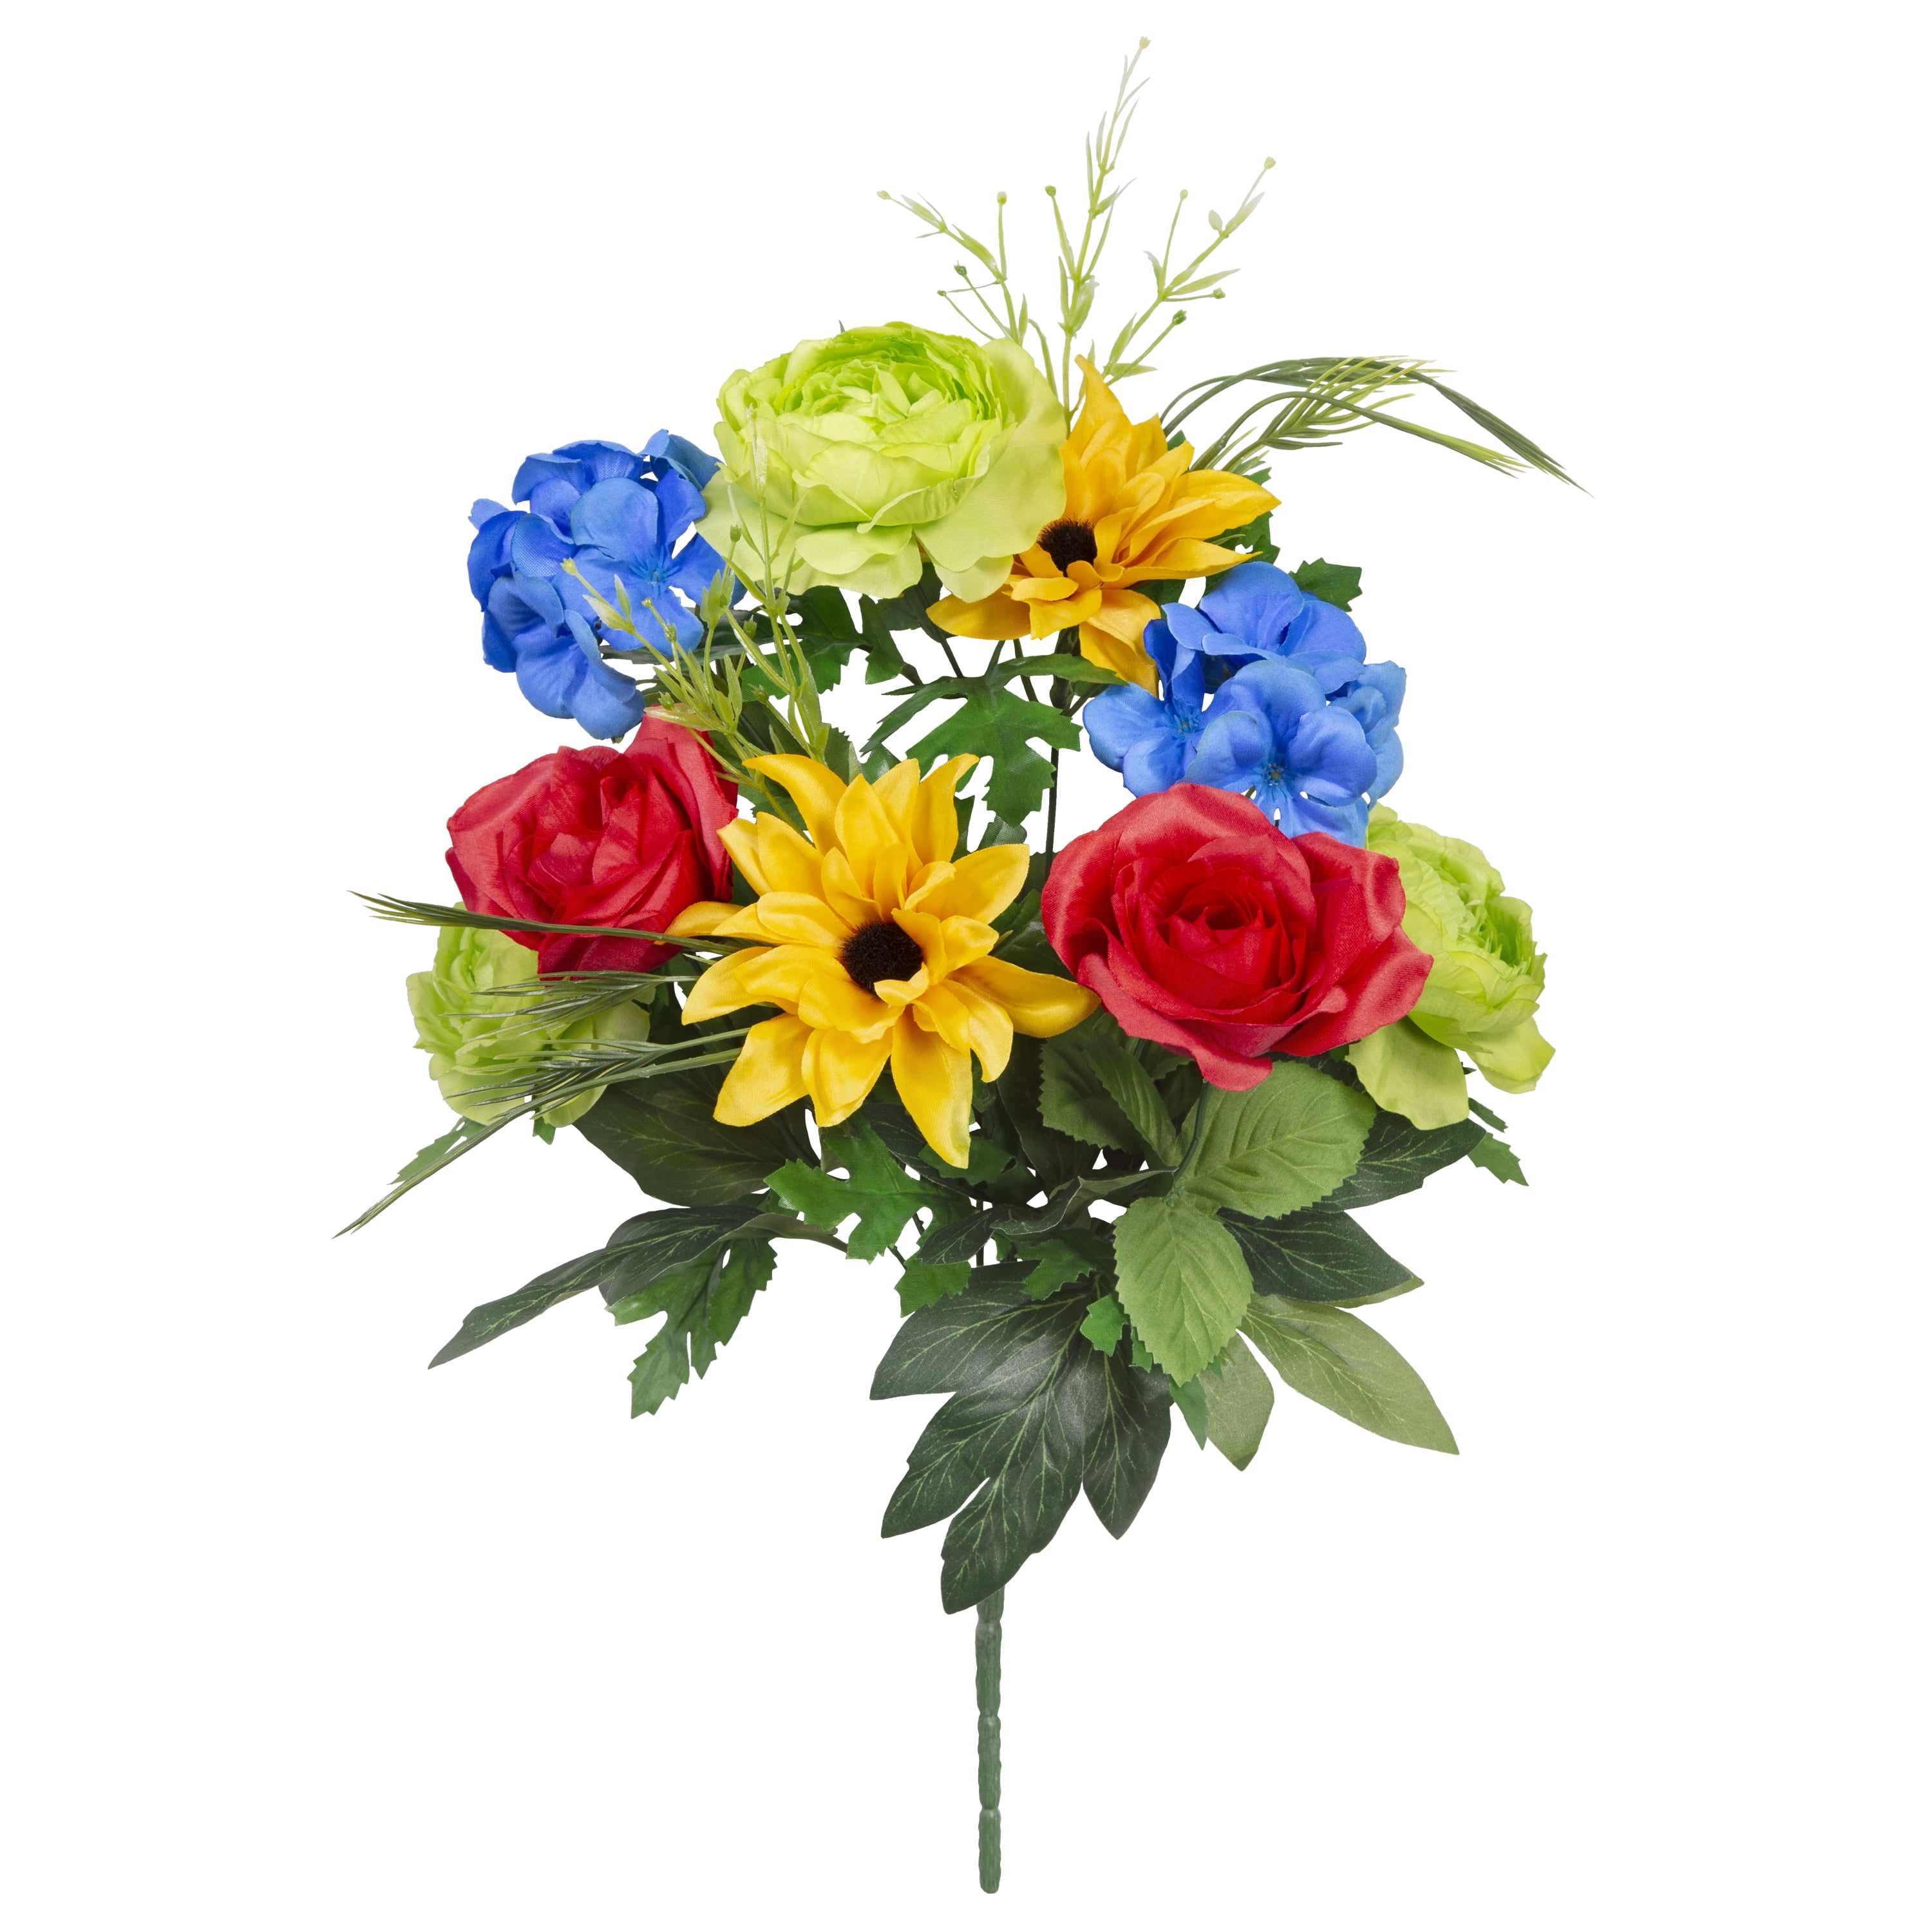 Mainstays Artificial Floral Mixed Bouquet Multi Green Red Yellow Blue 17 Walmart Com Walmart Com